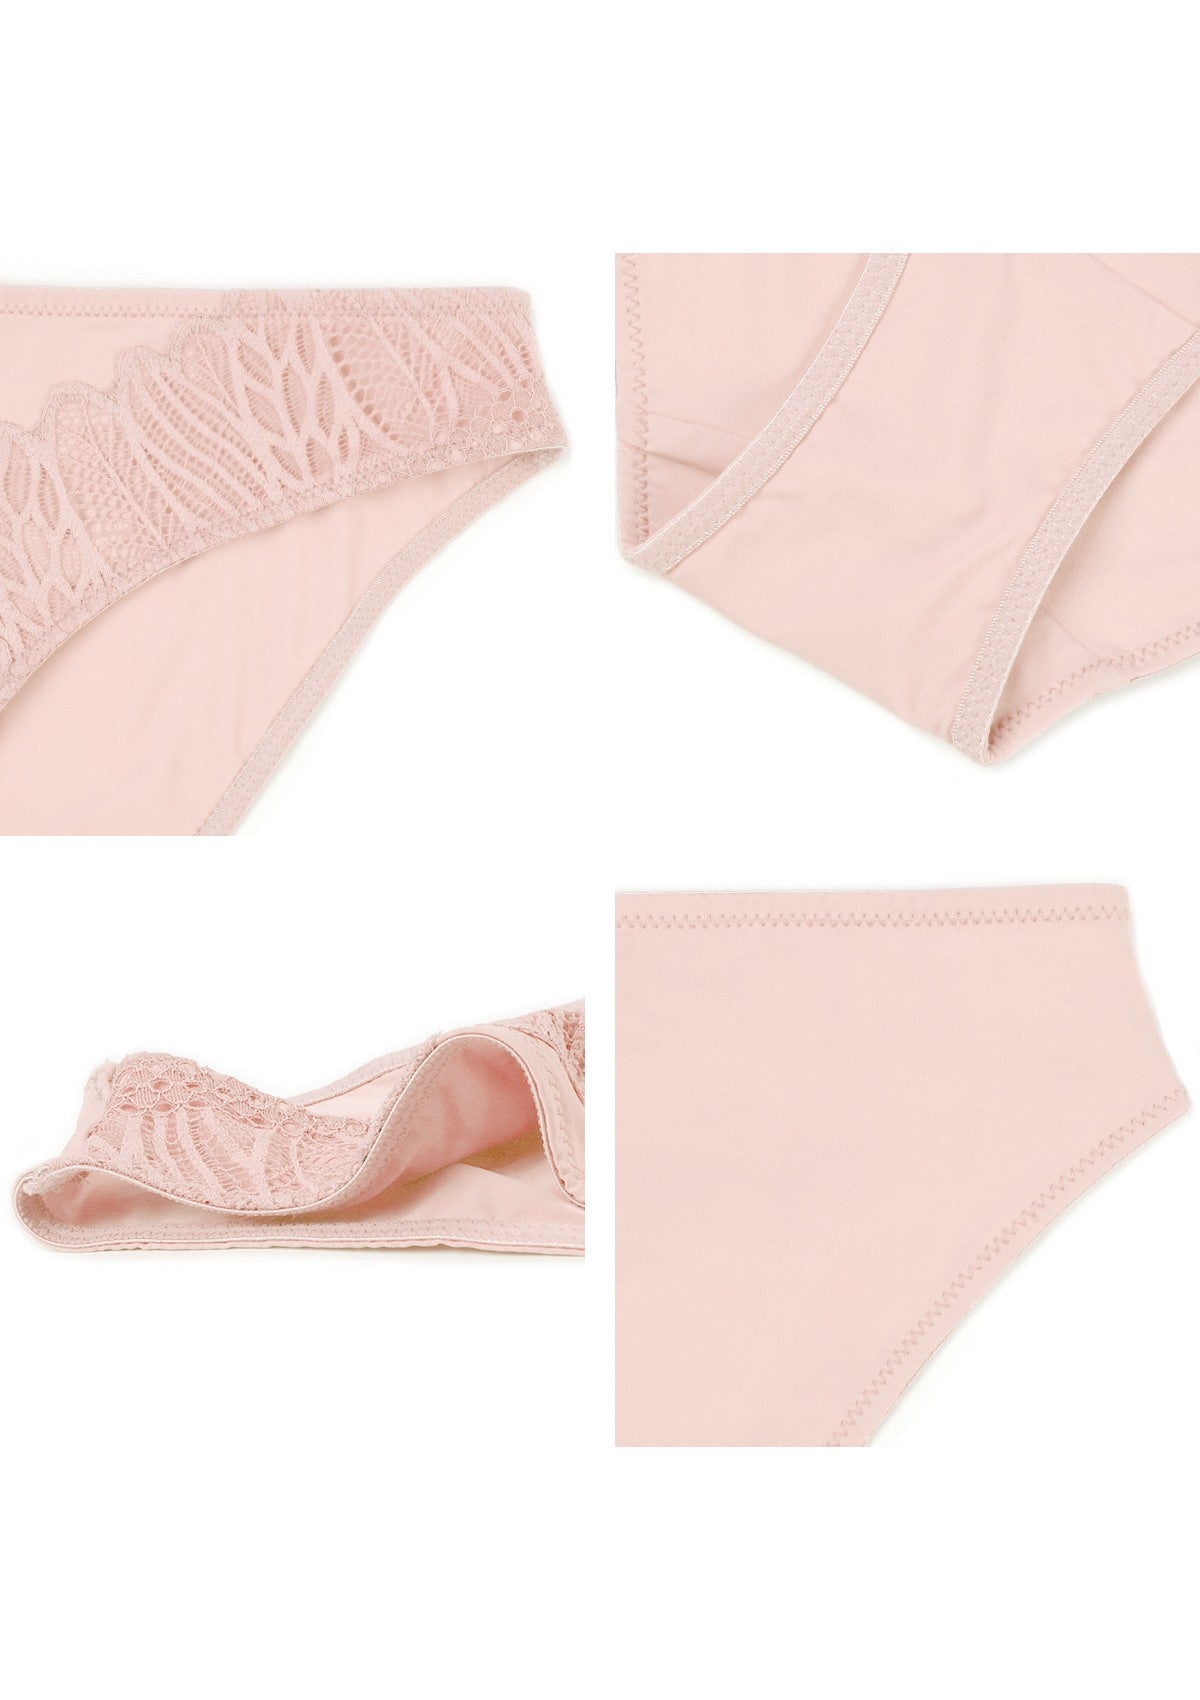 HSIA Pretty Secrets Cozy Stylish Lace Trim Feminine Modern Underwear - M / Light Pink